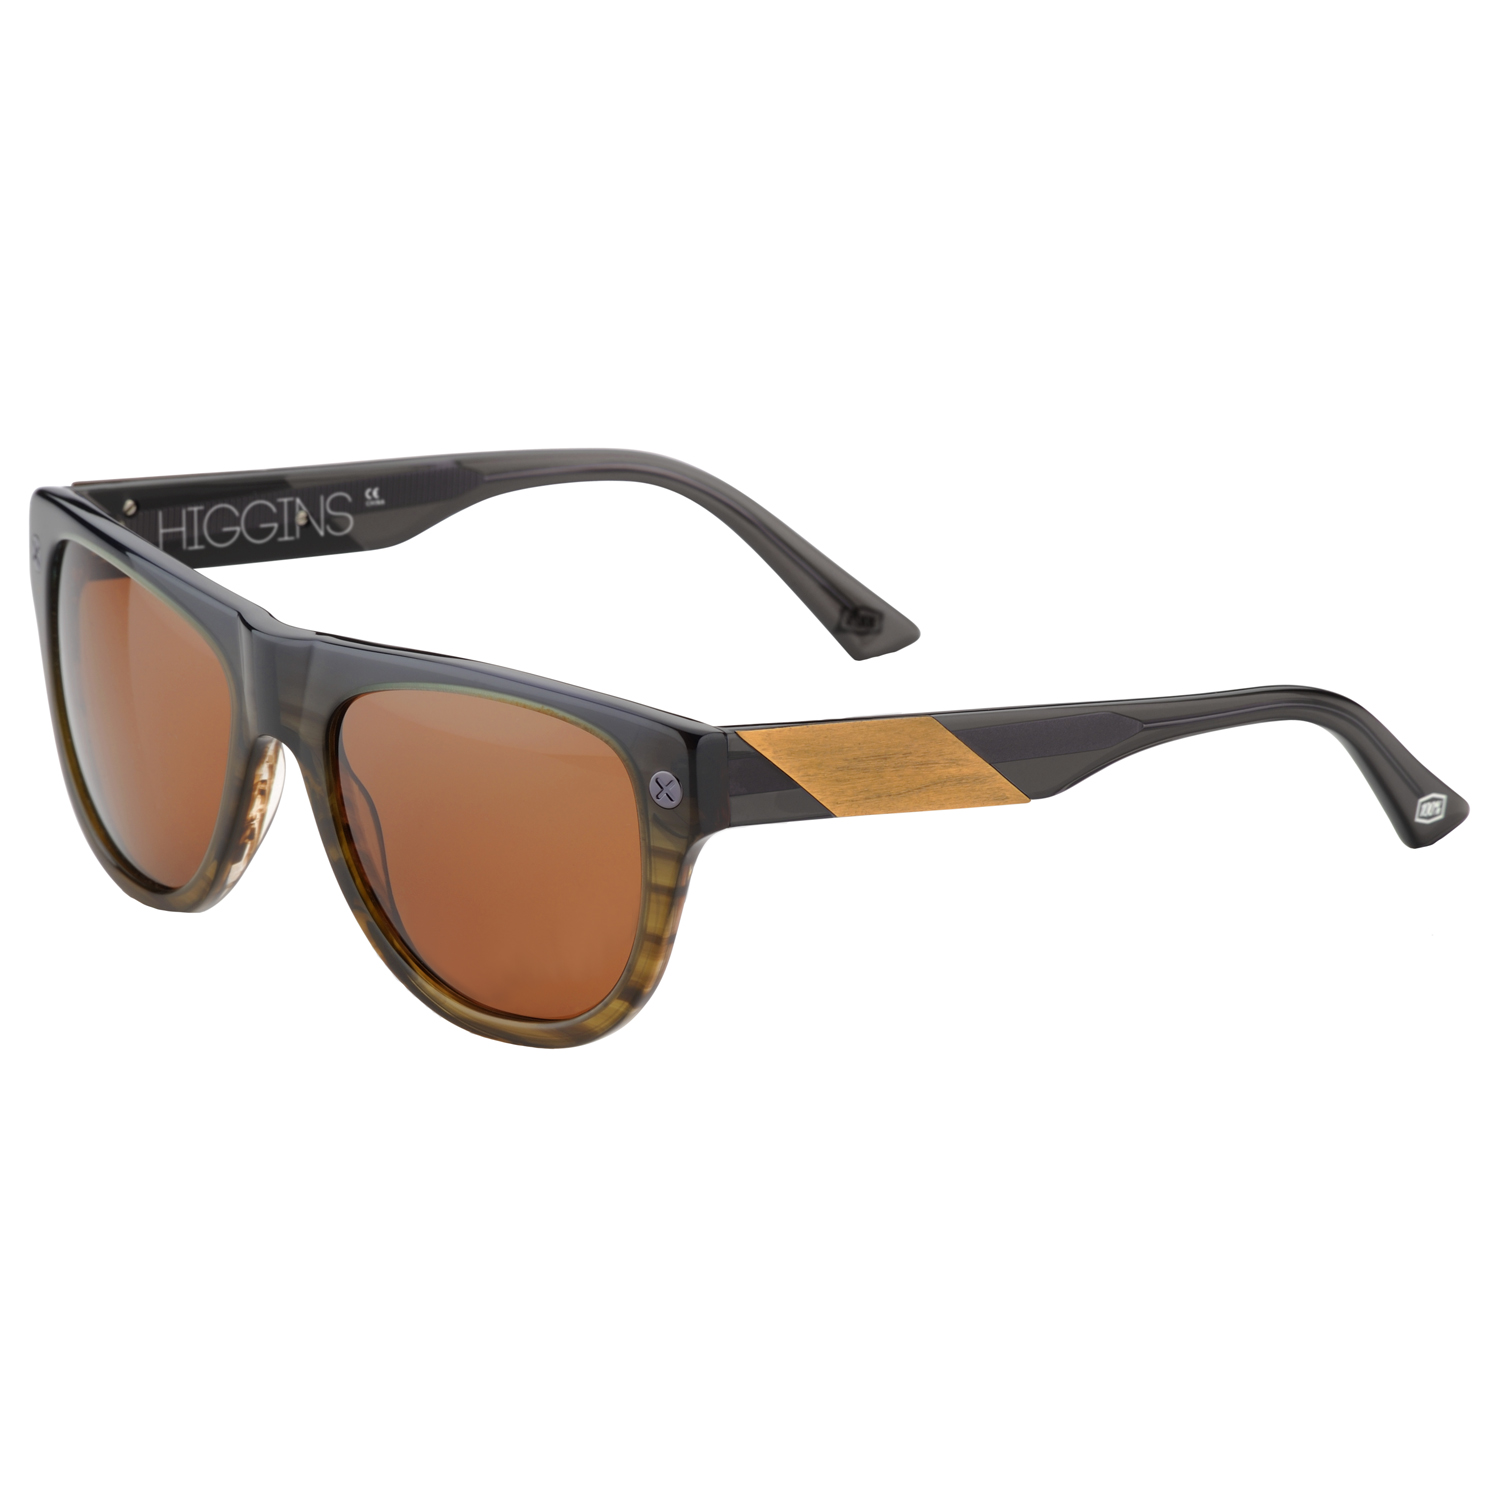 100% Sunglasses The Higgins Carbon Fade - Dark Bronze